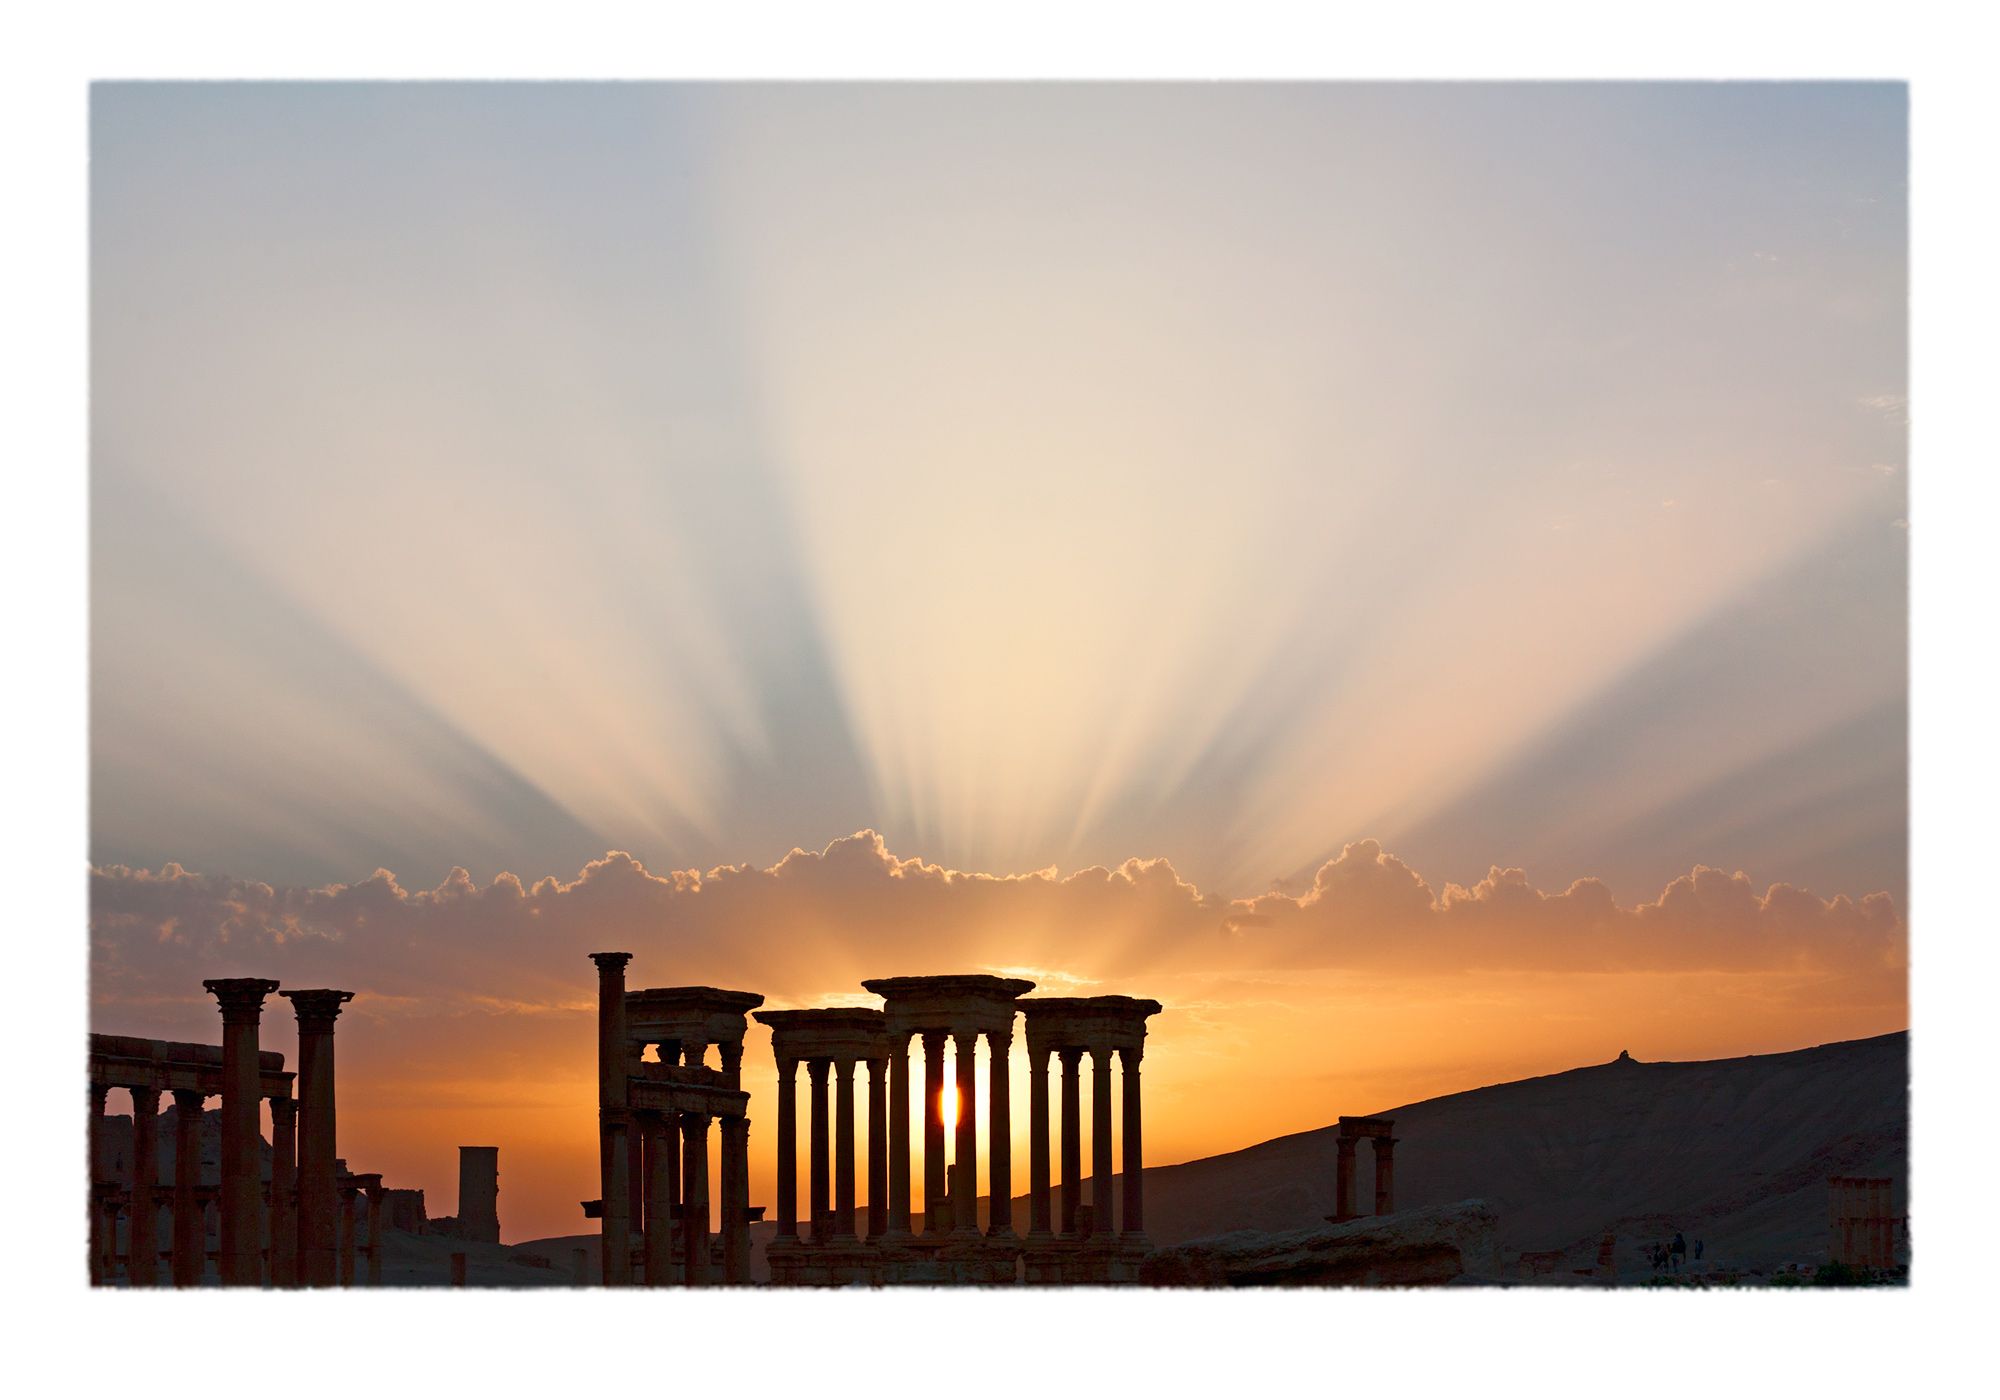 Radial spokes of sunset light over the Roman-era archaeological ruins of Palmyra, Syria